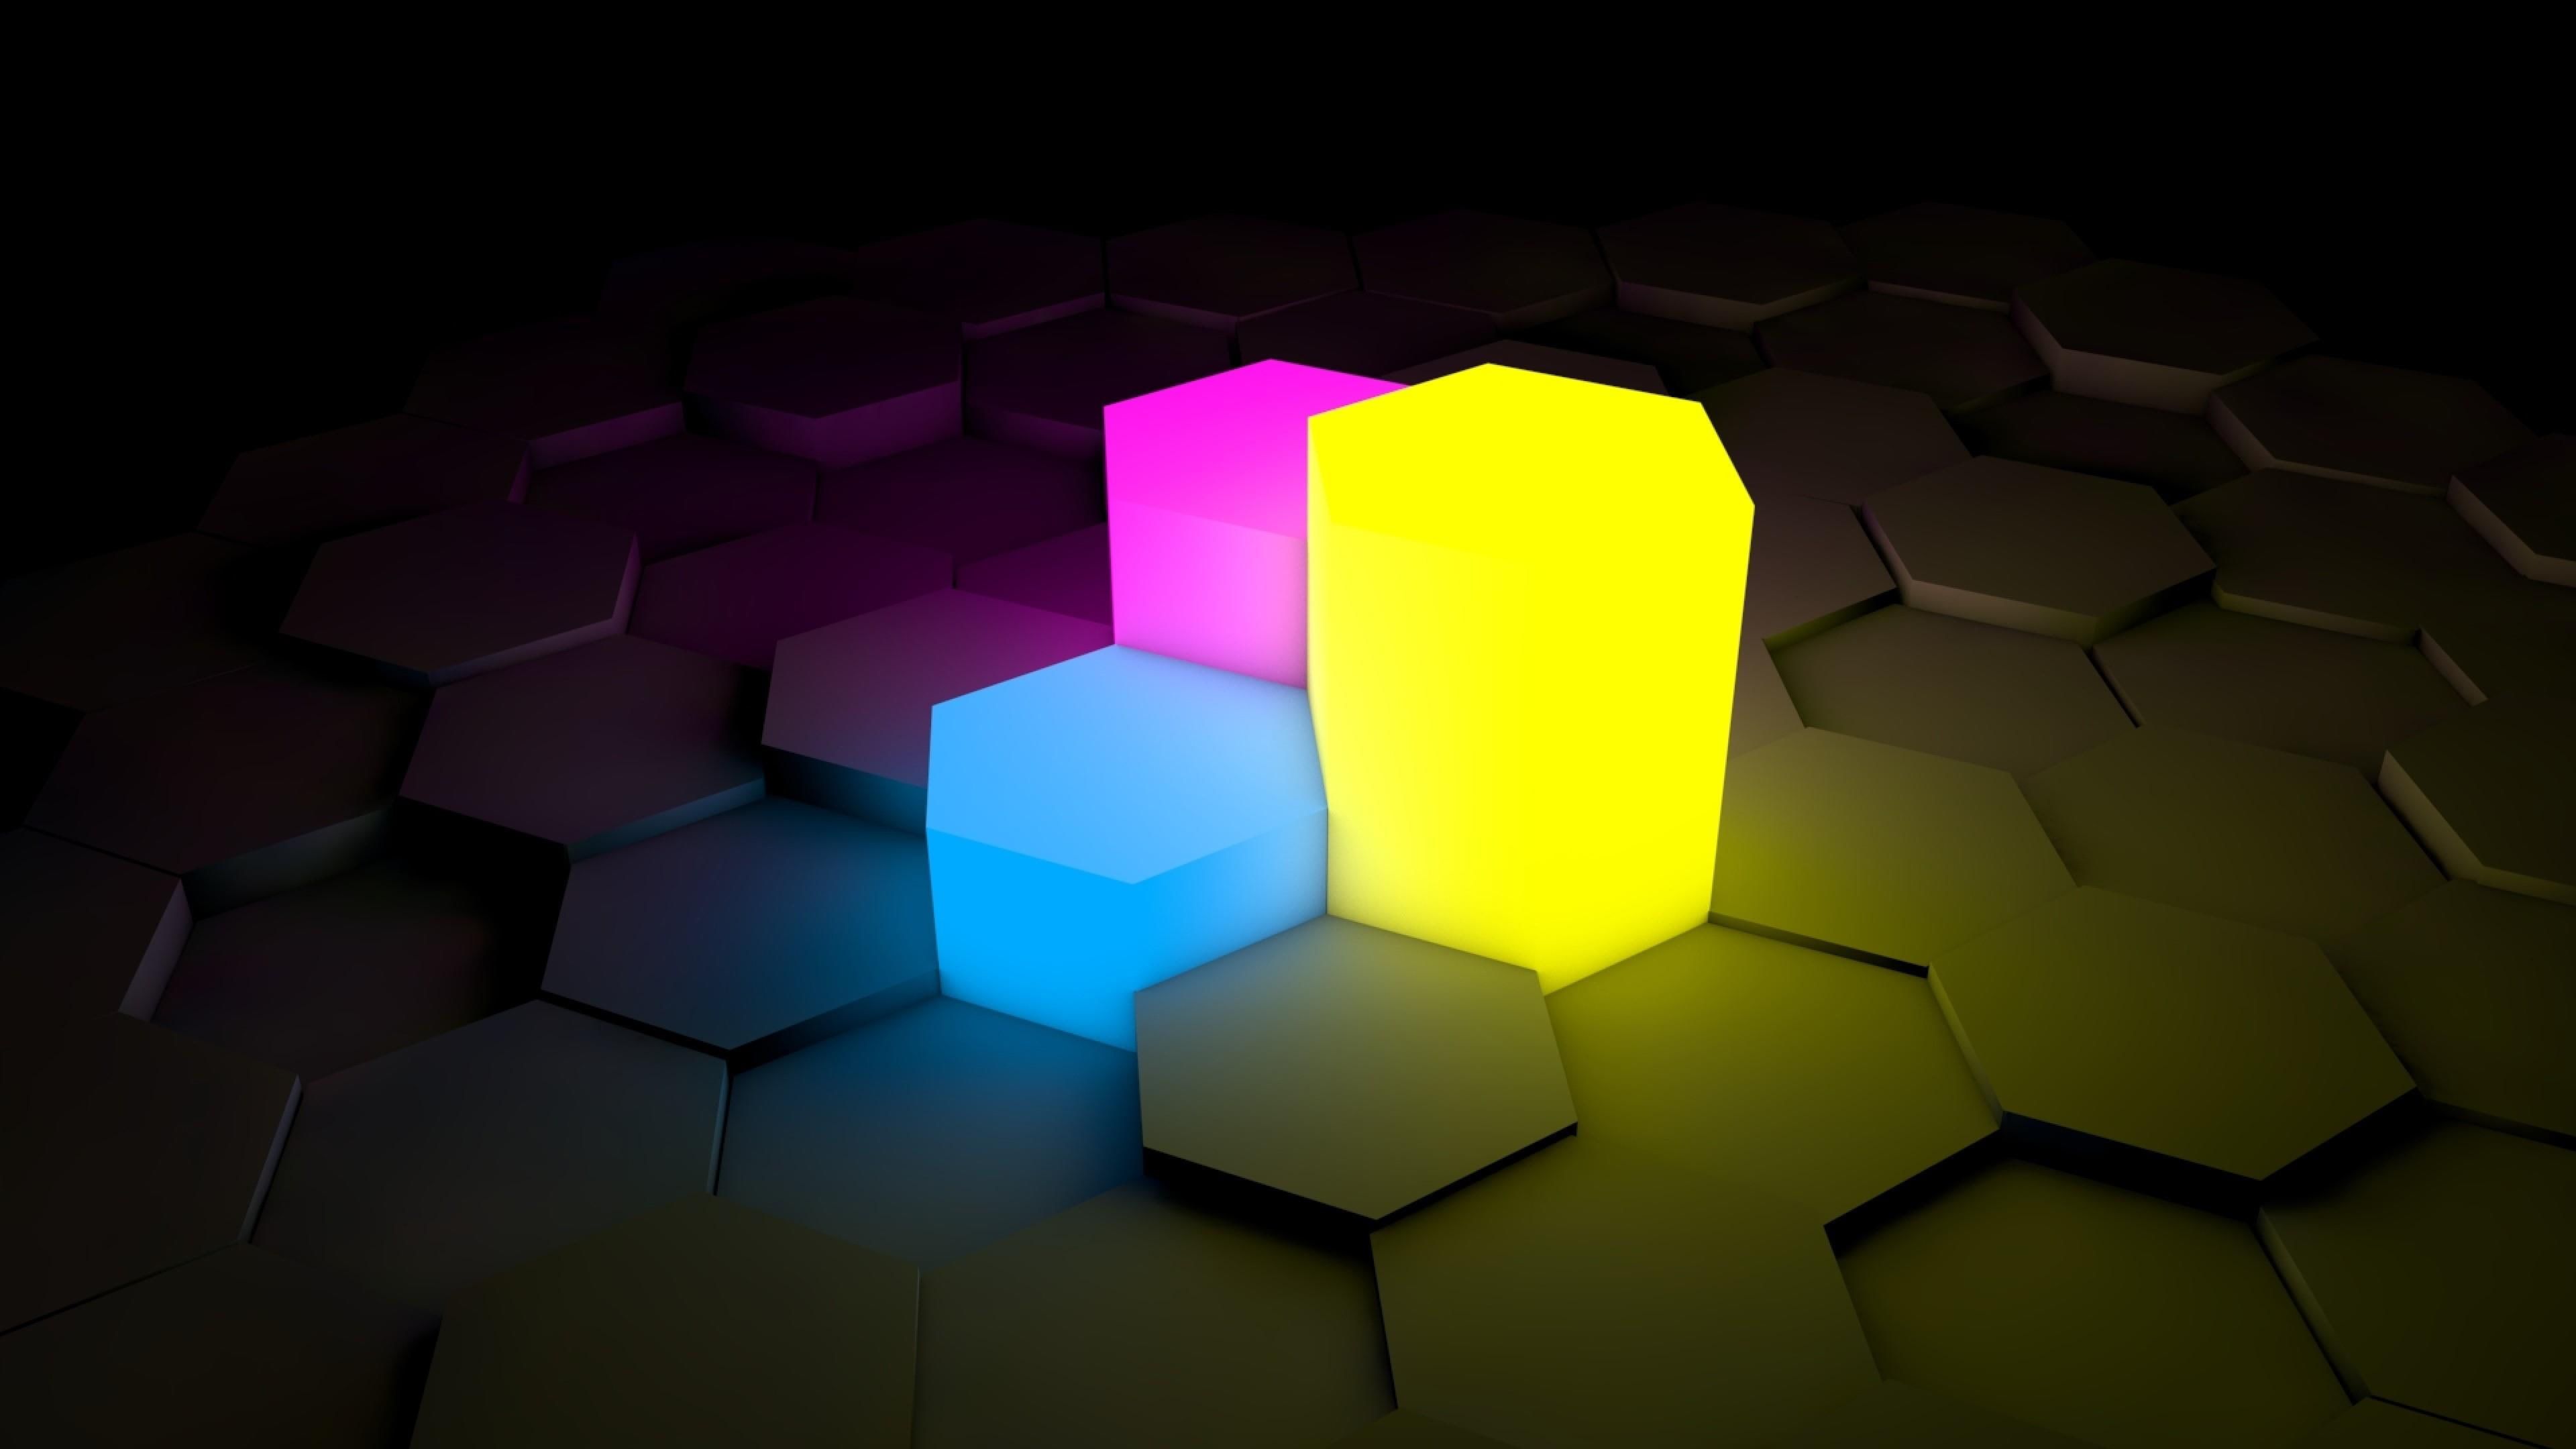 3D #blocks #blue #pink #yellow #dark #abstract #hexagon #shining #shadow #focus #neon K #wallpaper #hdwallpape. Neon wallpaper, Hexagon wallpaper, Wallpaper pc